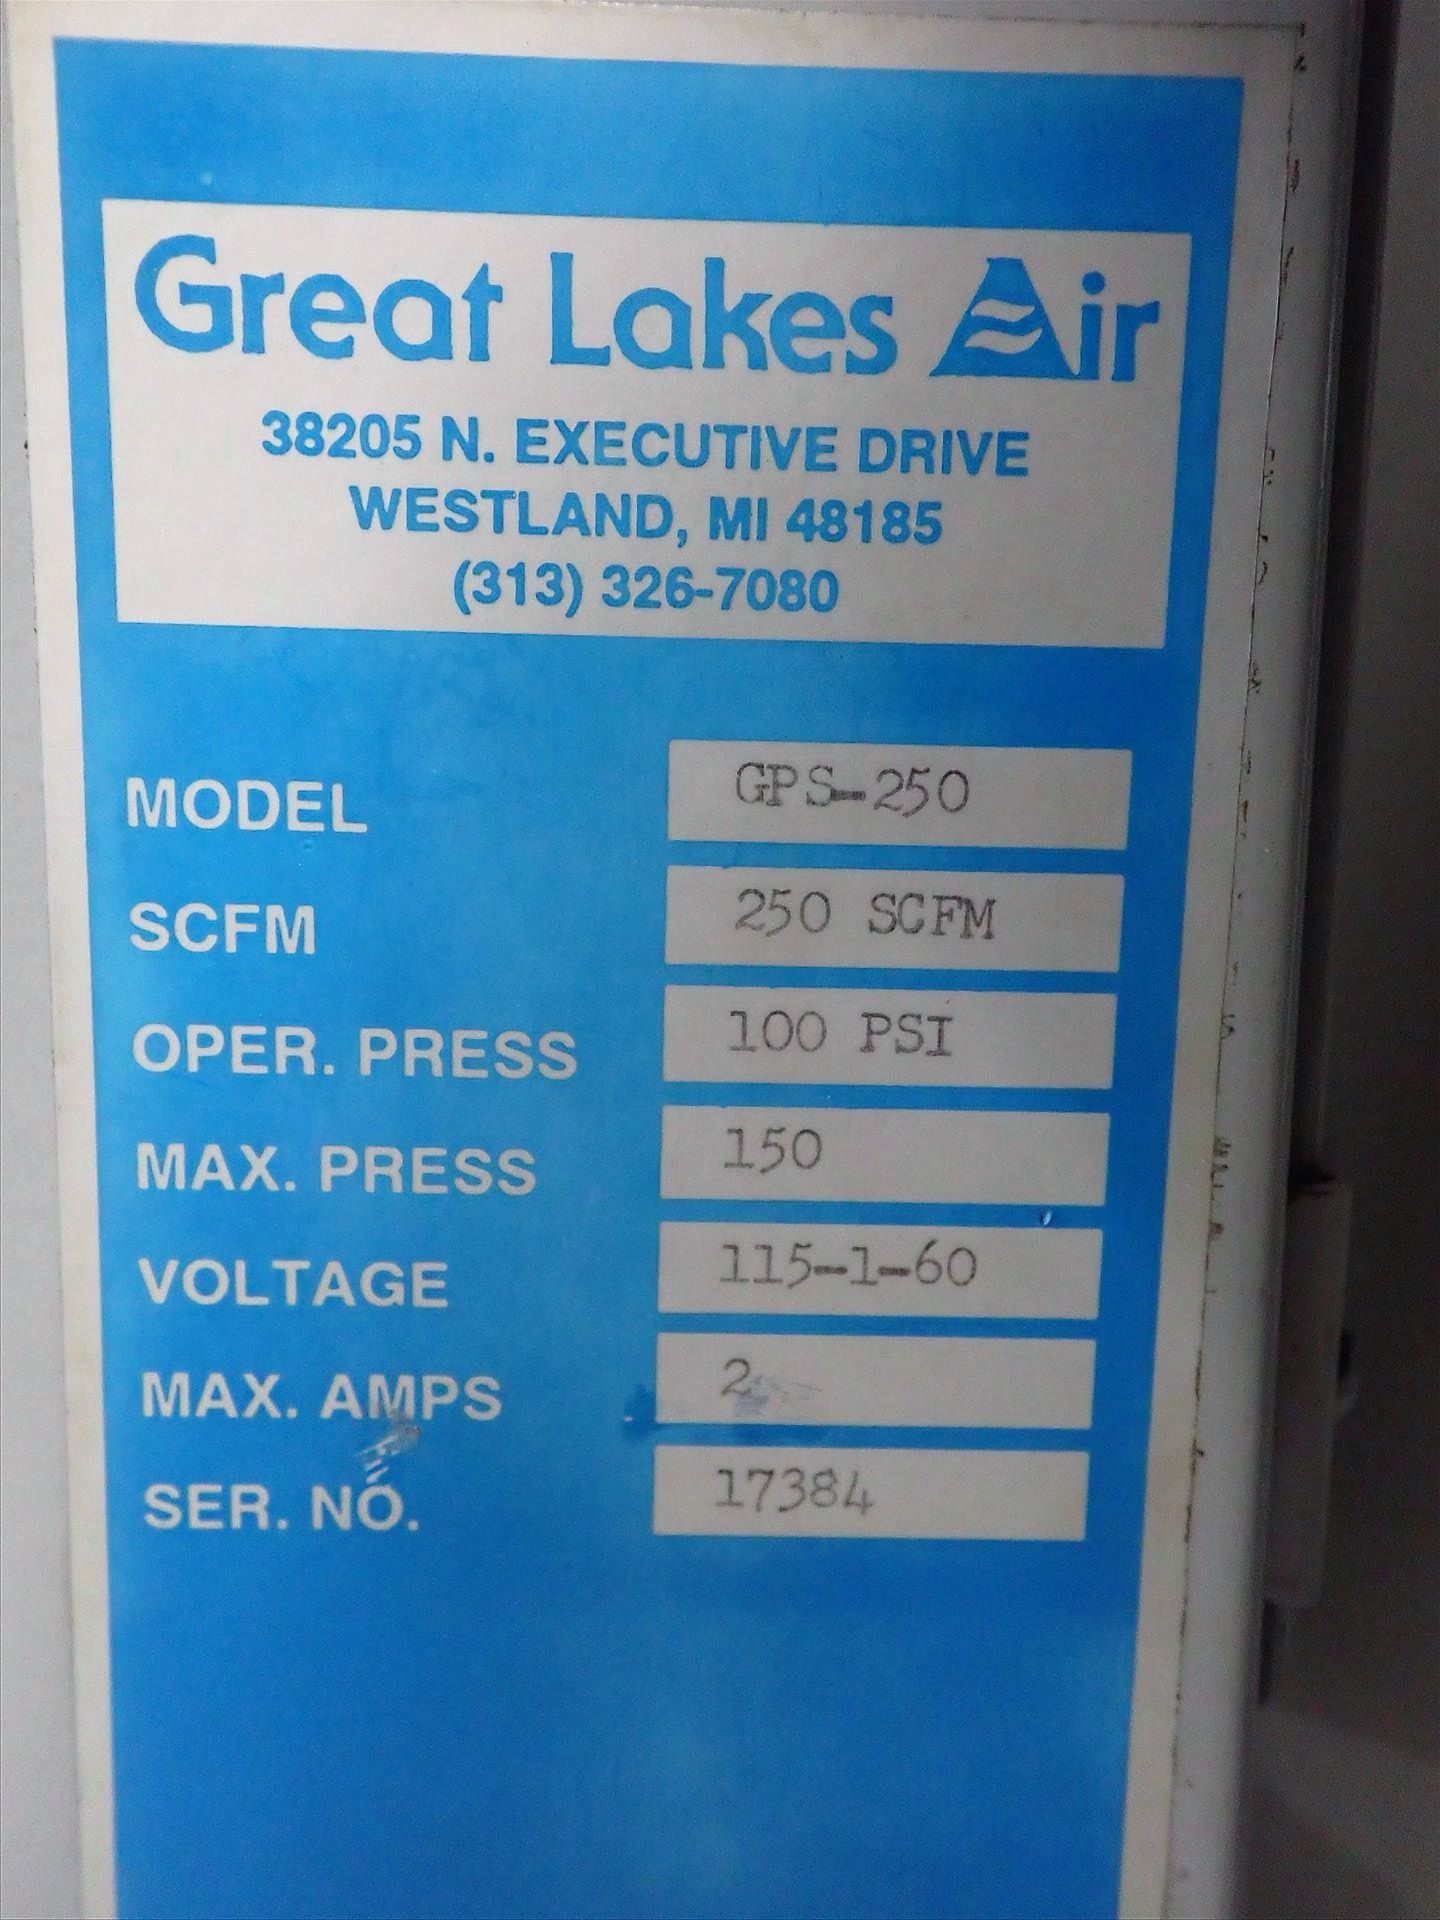 Great Lakes Air Dryer, mod. GPS-250. ser. no. 17384, 250 SCFM, operating 100 psi. - Image 3 of 5